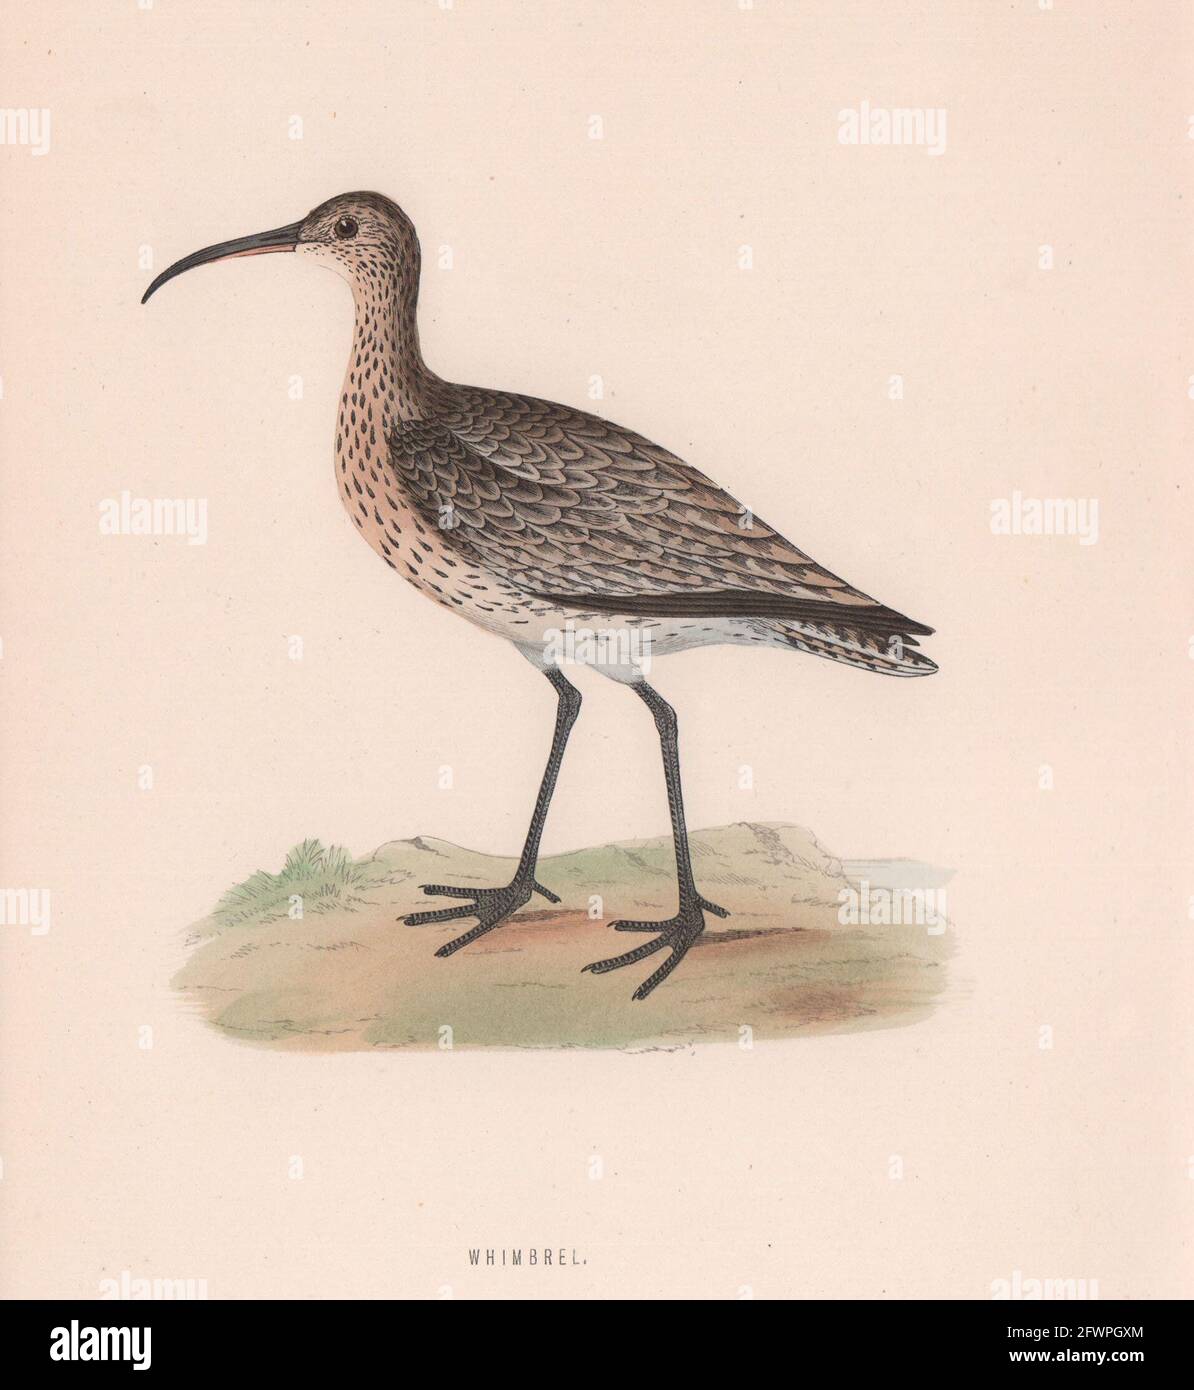 Whimbrel. Morris's British Birds. Antik Farbdruck 1870 alt Stockfoto